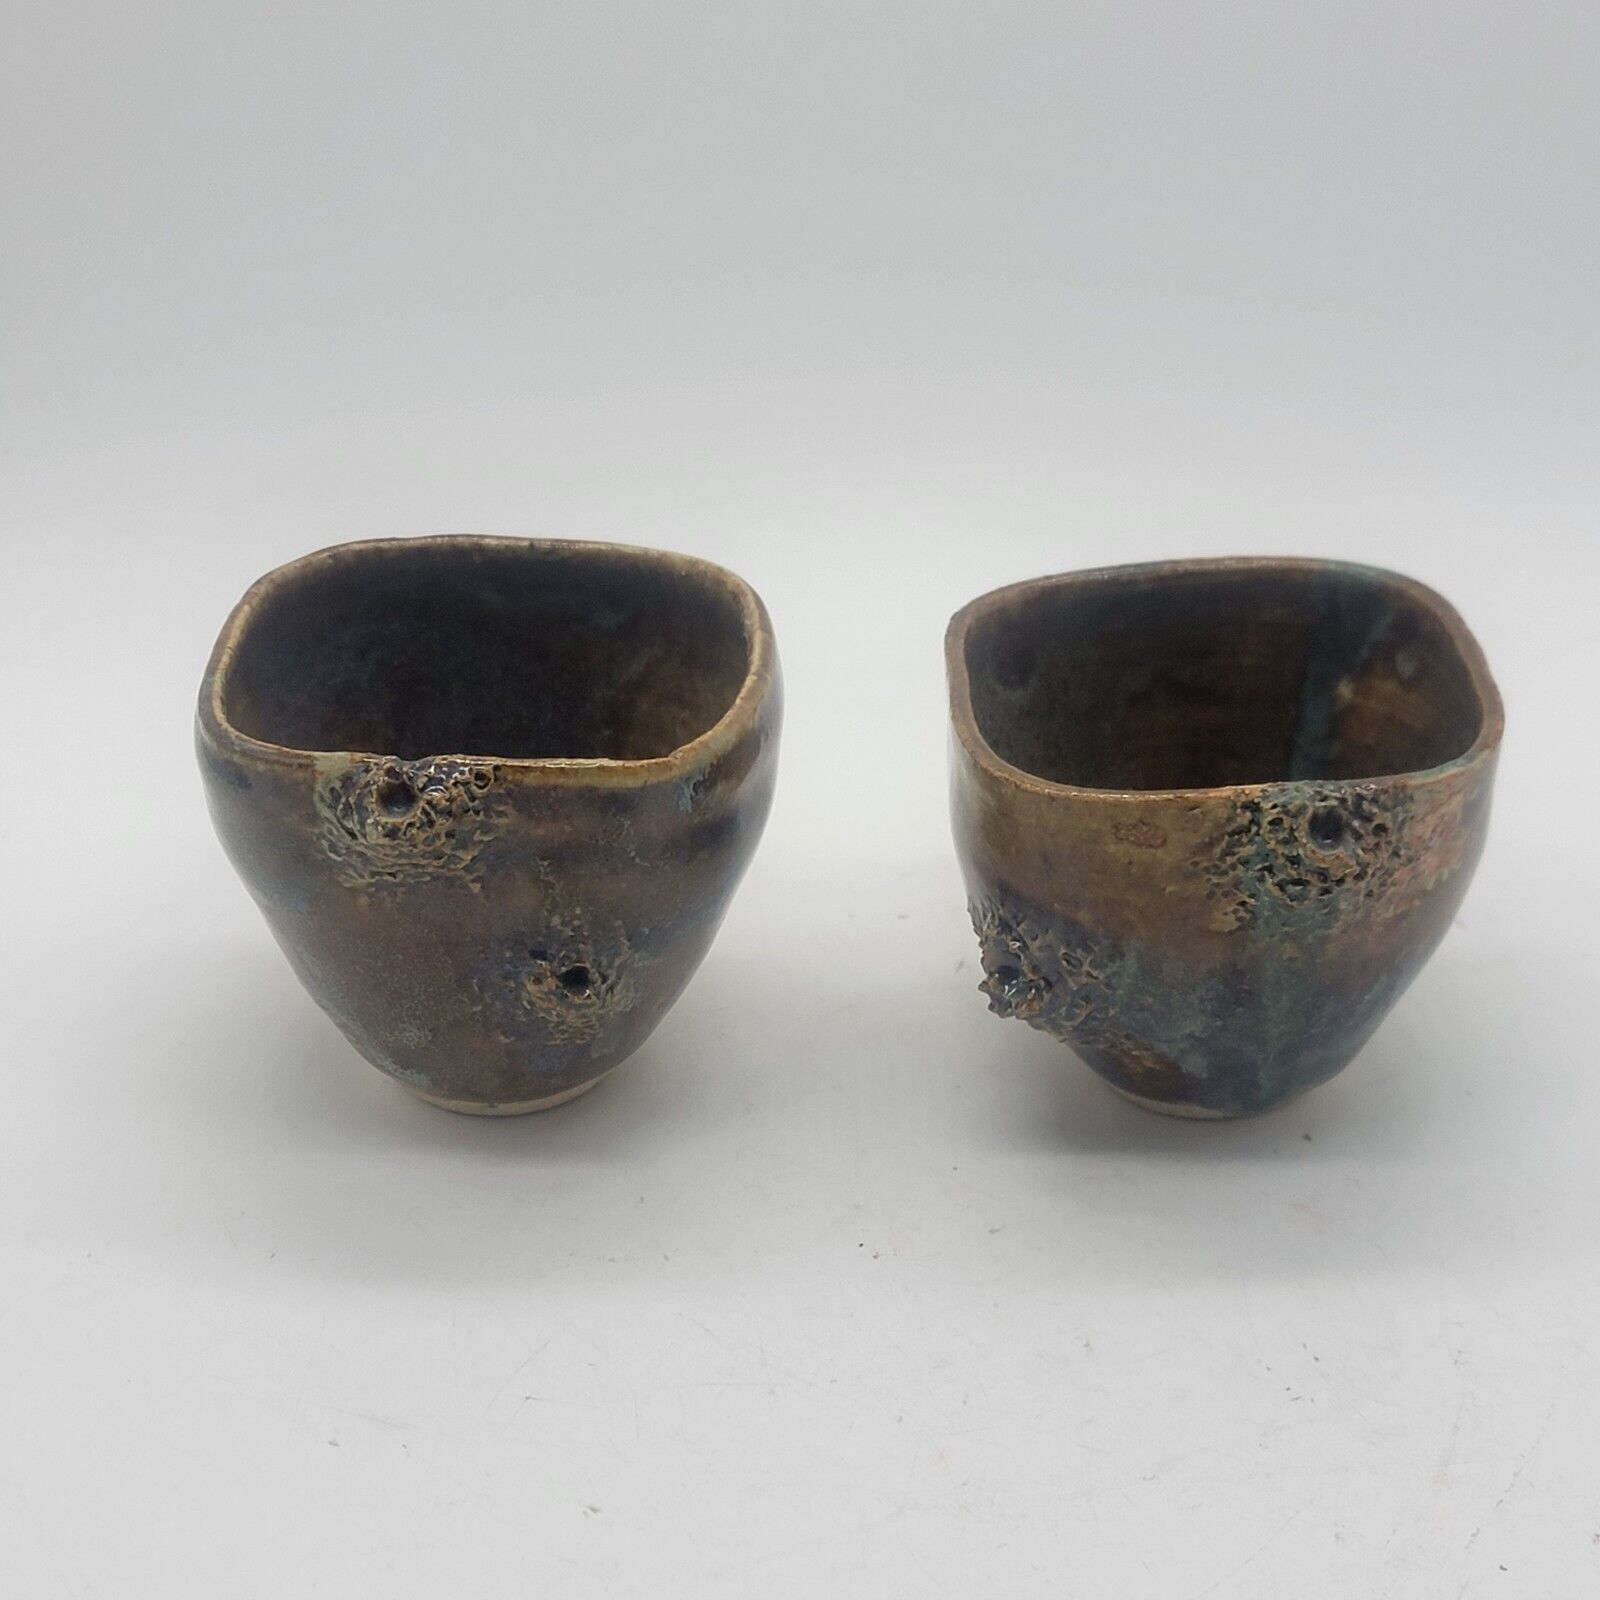 2 wood fired unglazed clay sculpture handmade teacups